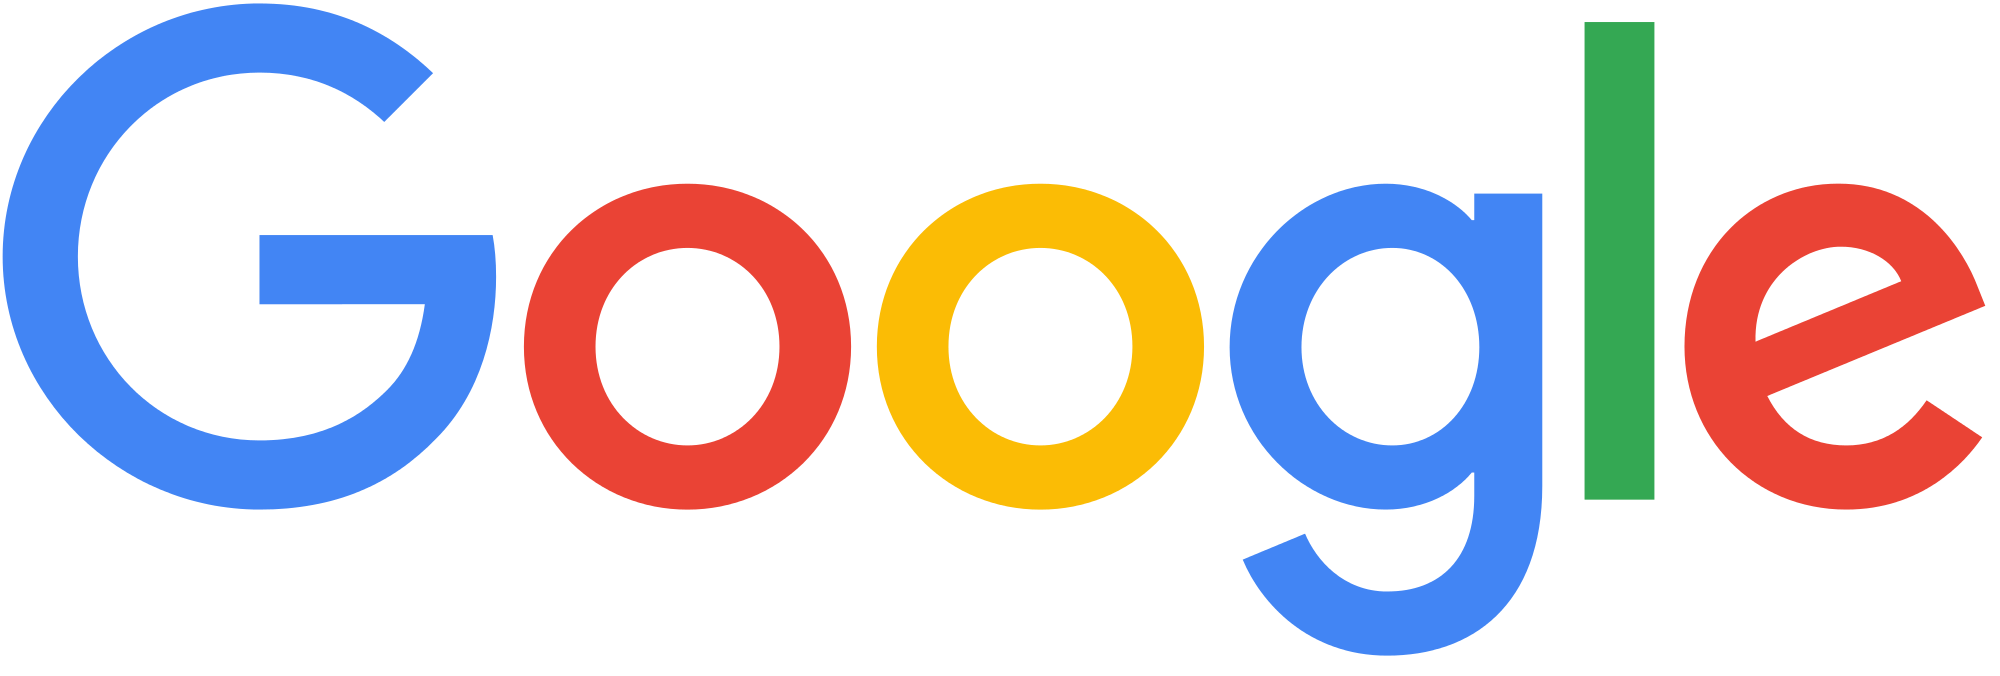 Digital-xp-logo